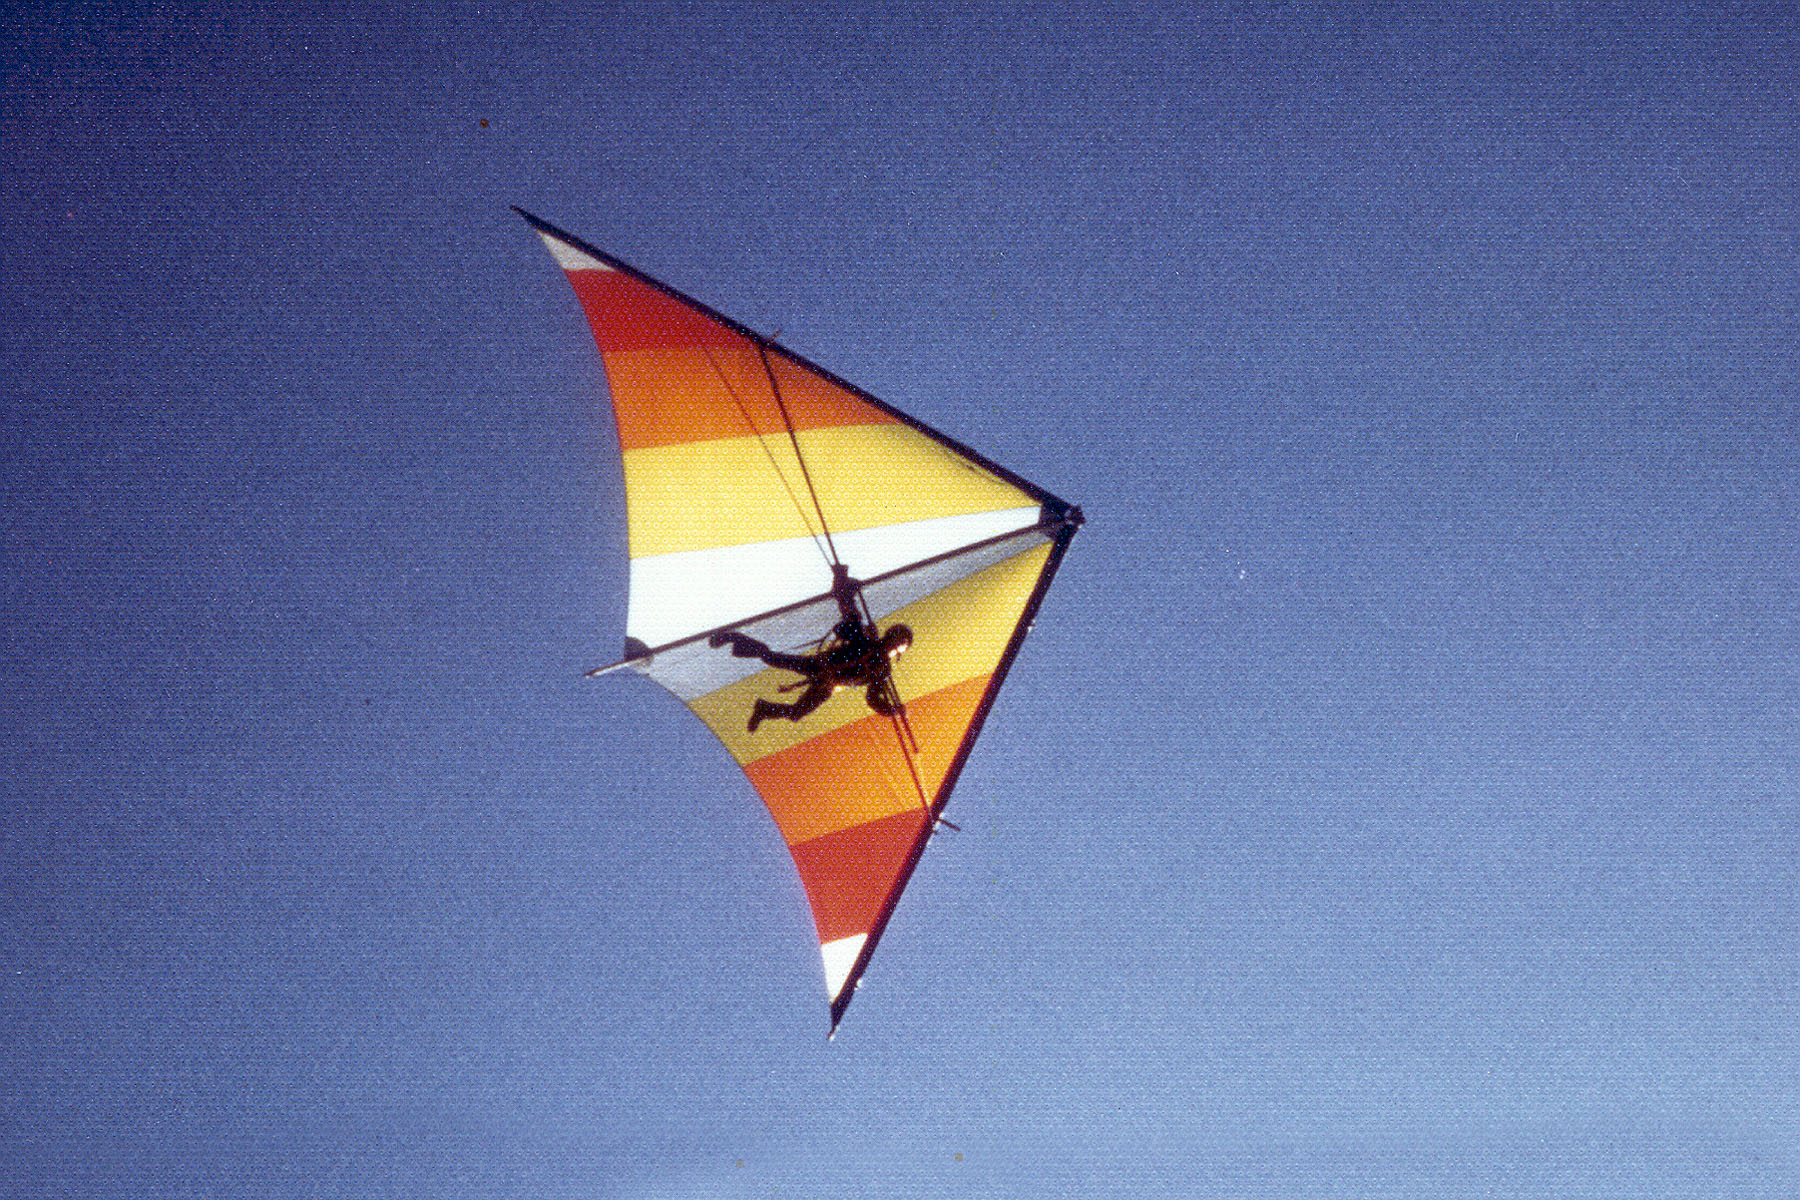 Paul Hamiltons second delta wing design